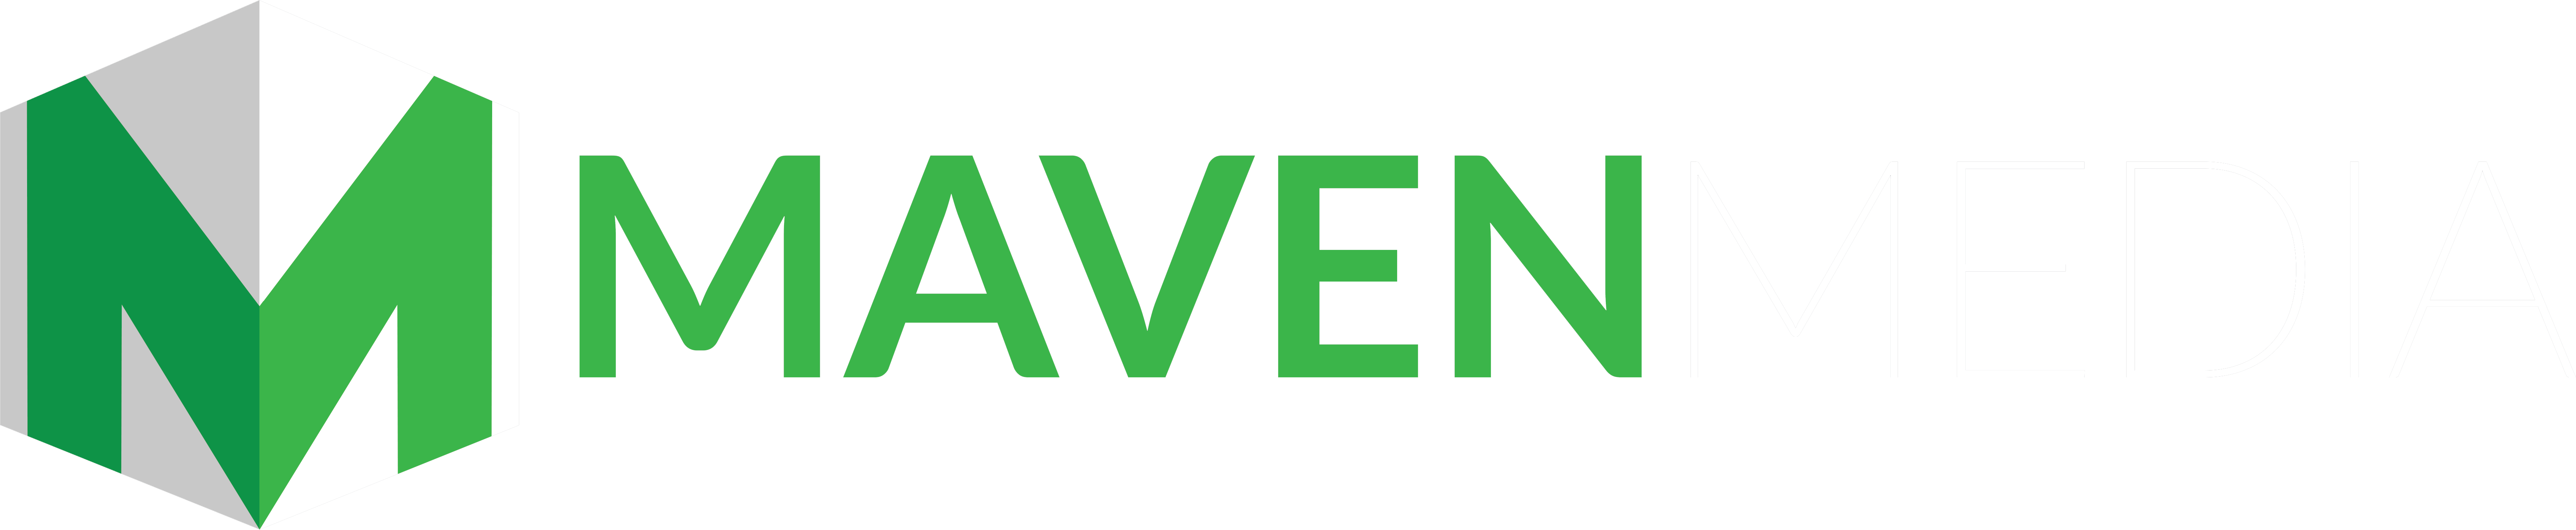 Maven Media